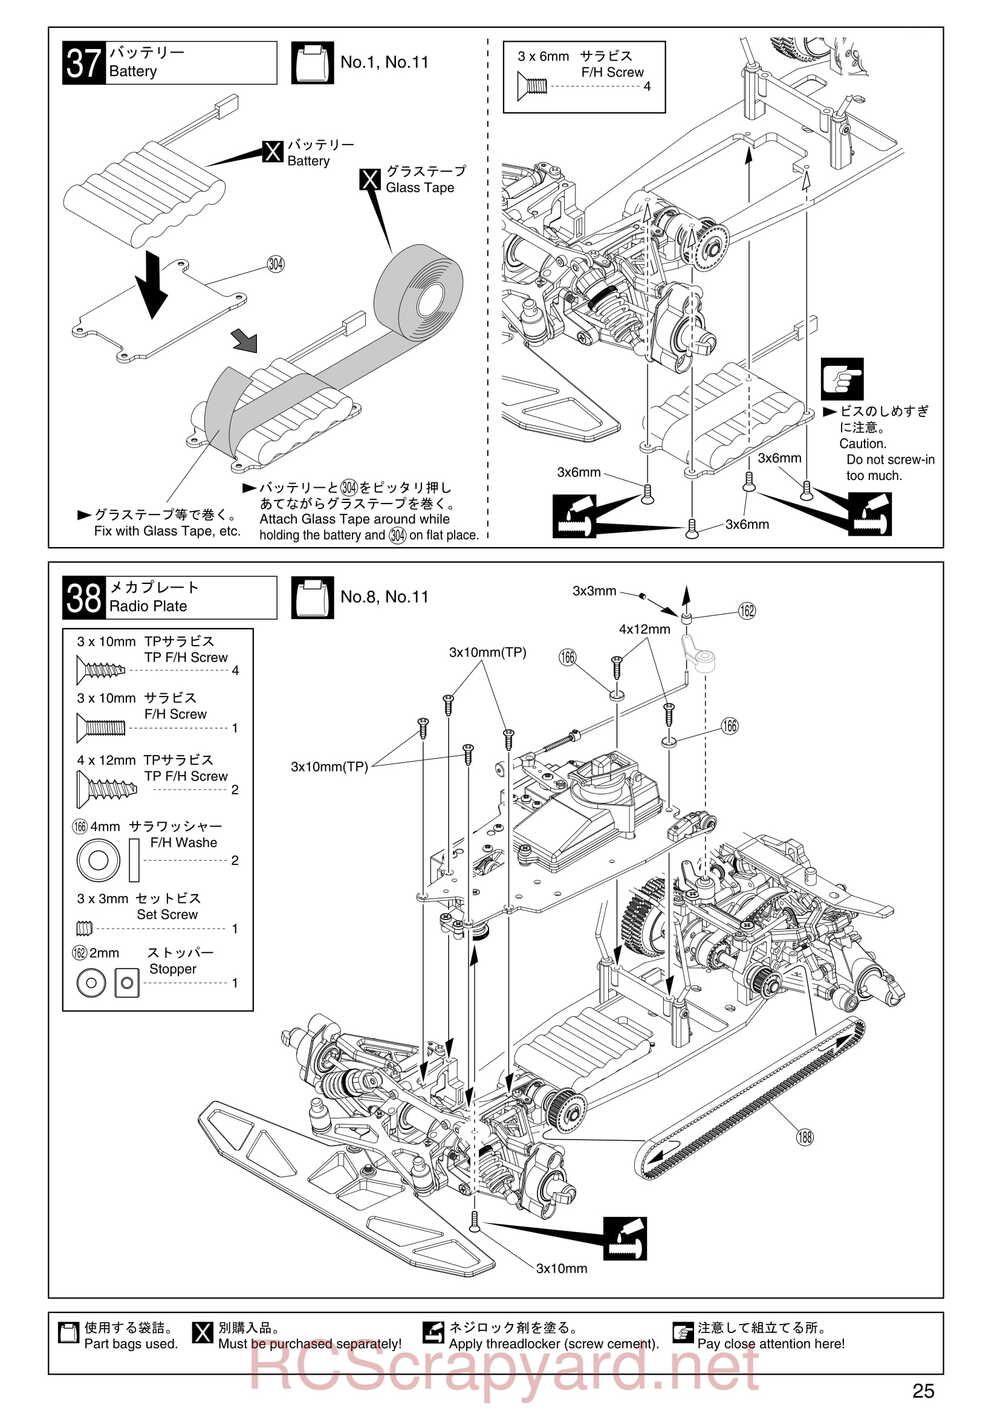 Kyosho - 31283 - Evolva-2003 - Manual - Page 25